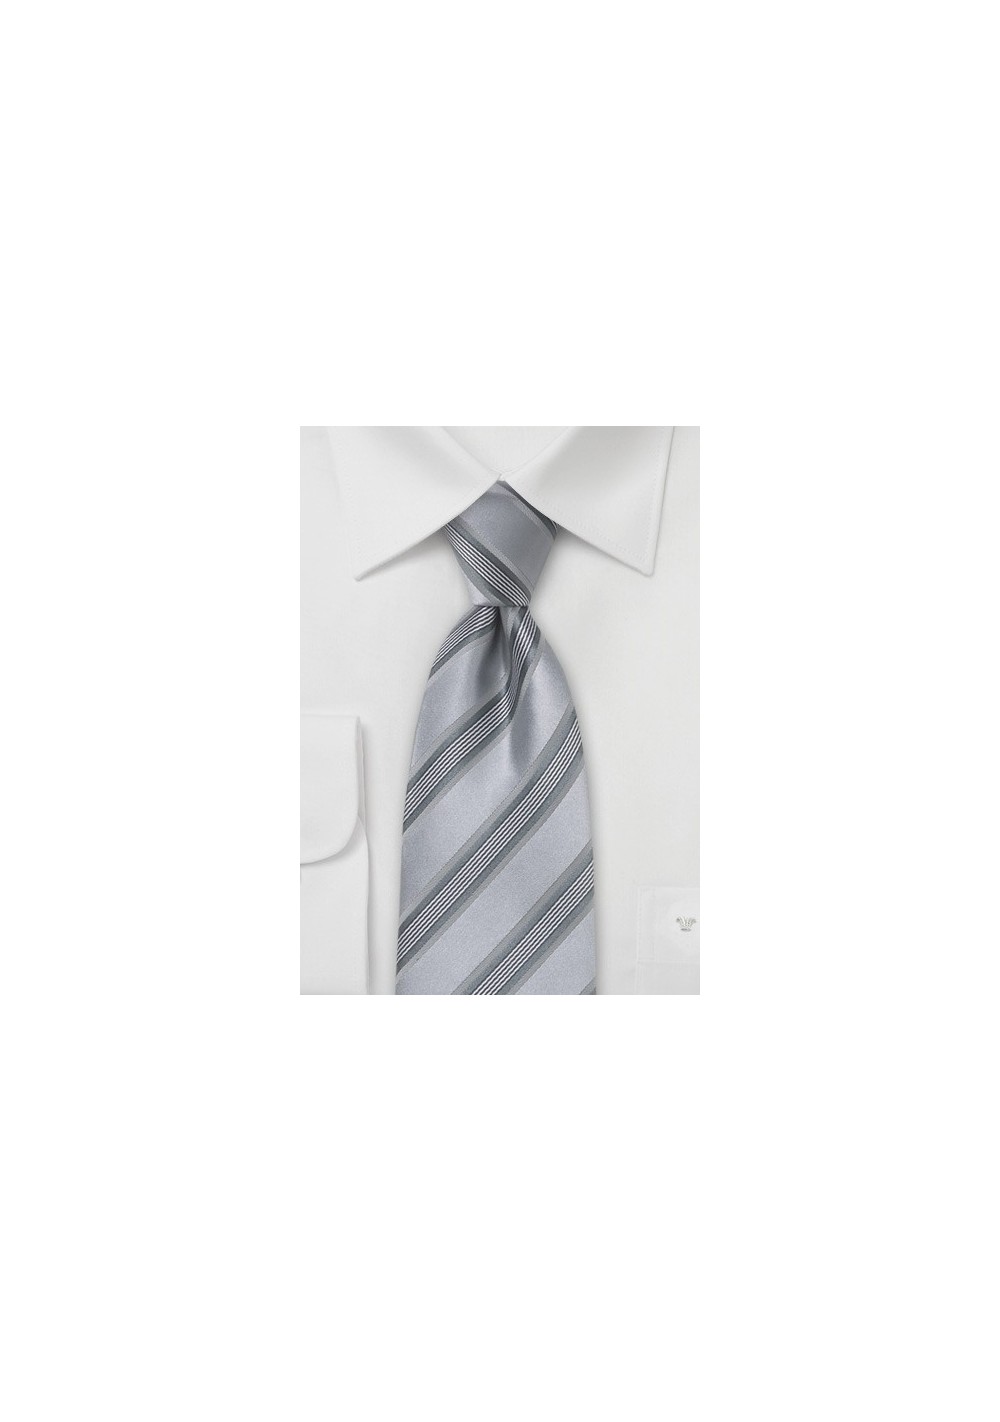 Silver Striped Silk Tie for Kids